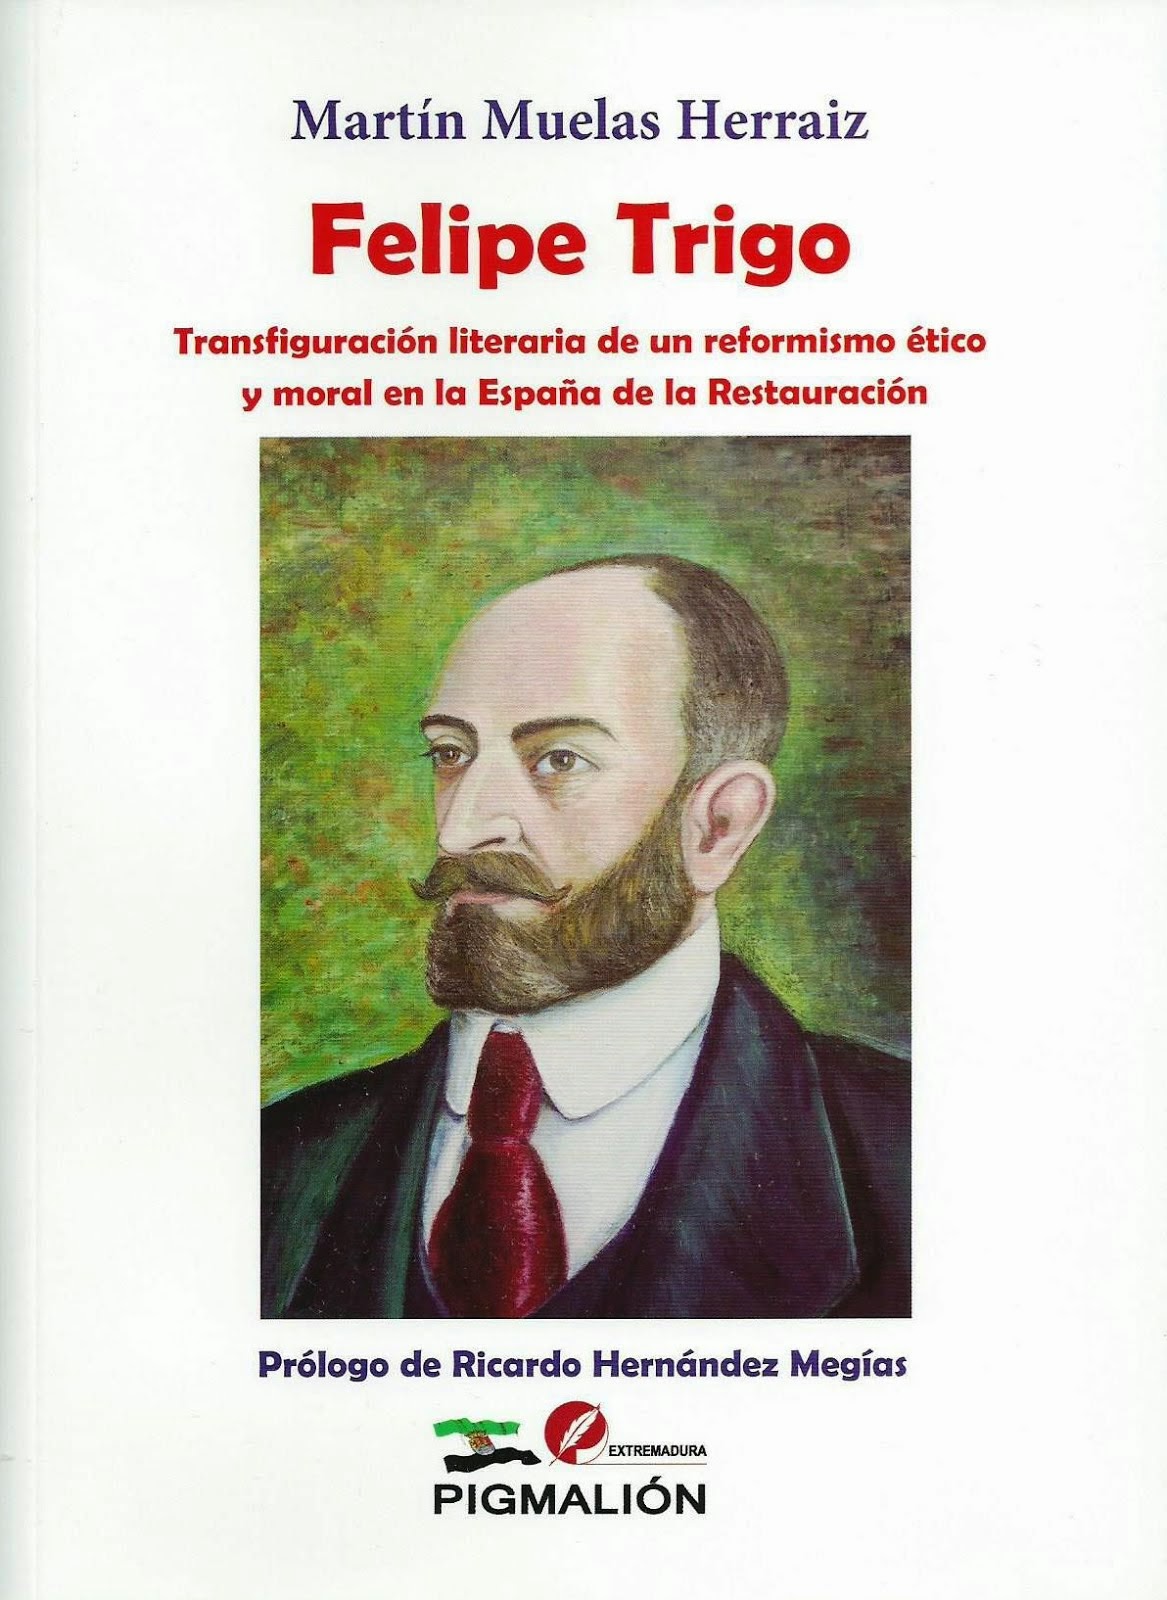 Felipe Trigo